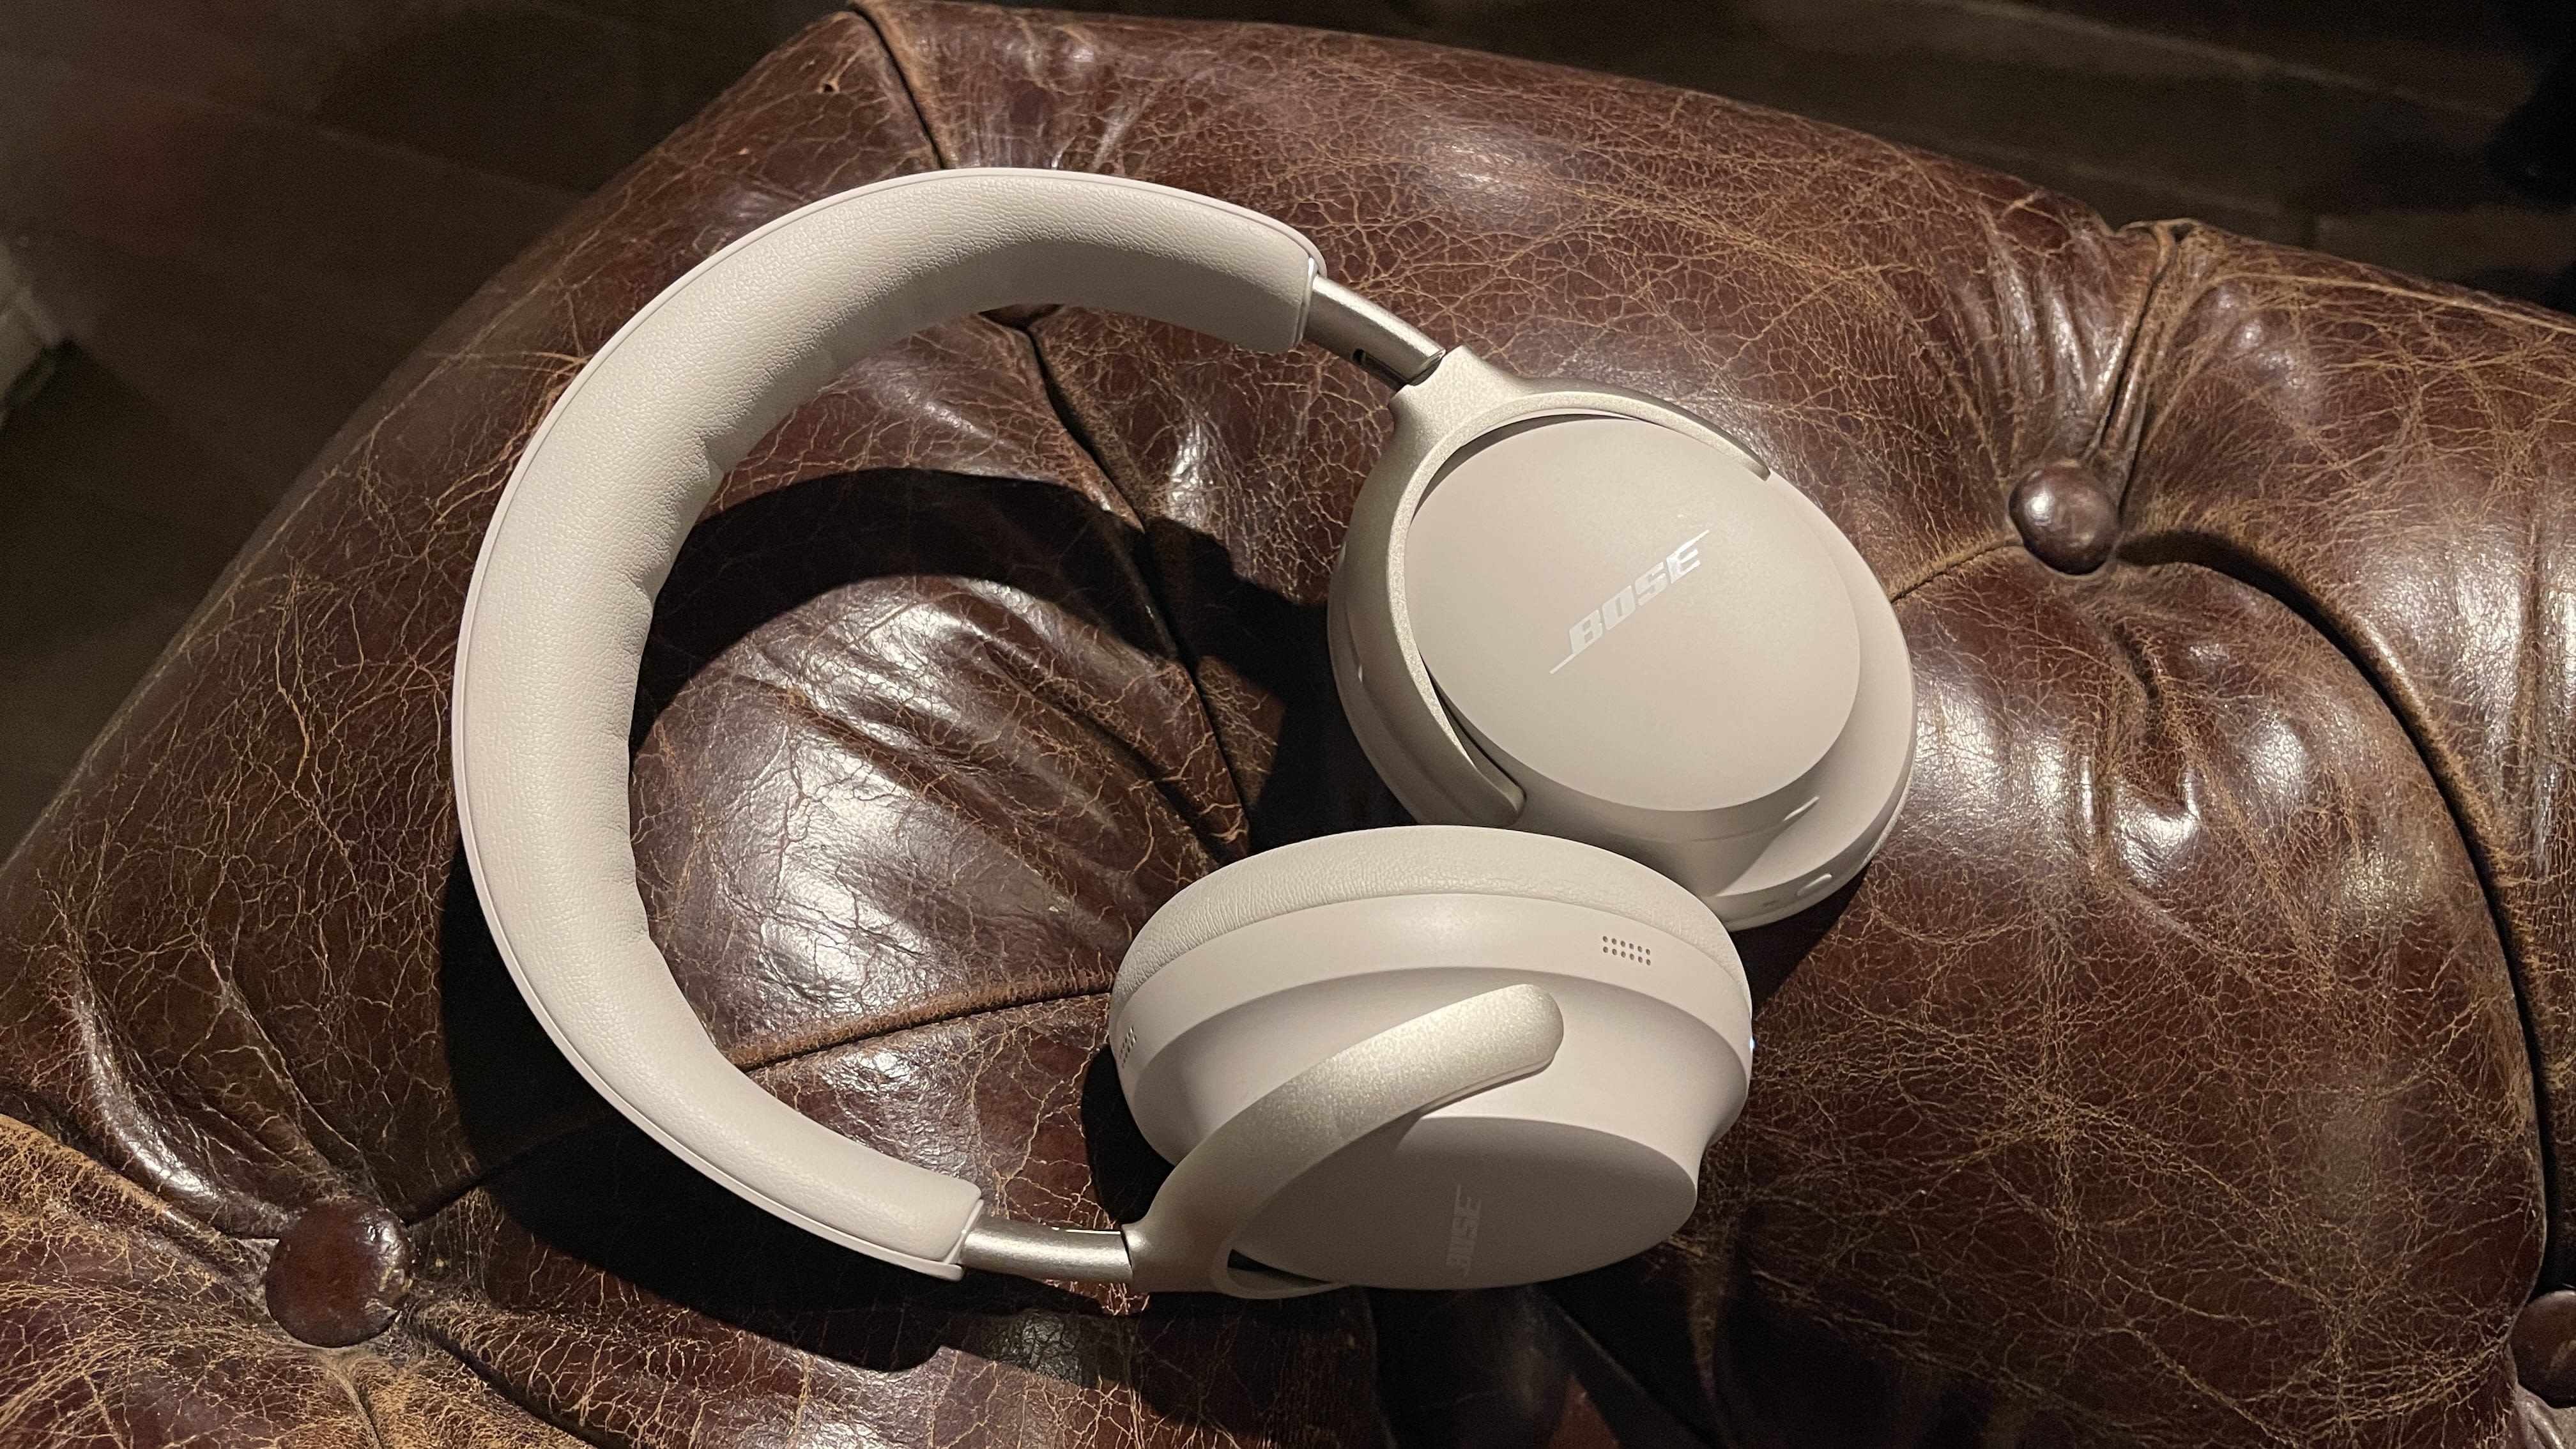 Bose QuietComfort Ultra Wireless Noise Cancelling Bluetooth Headphones,  White Smoke 